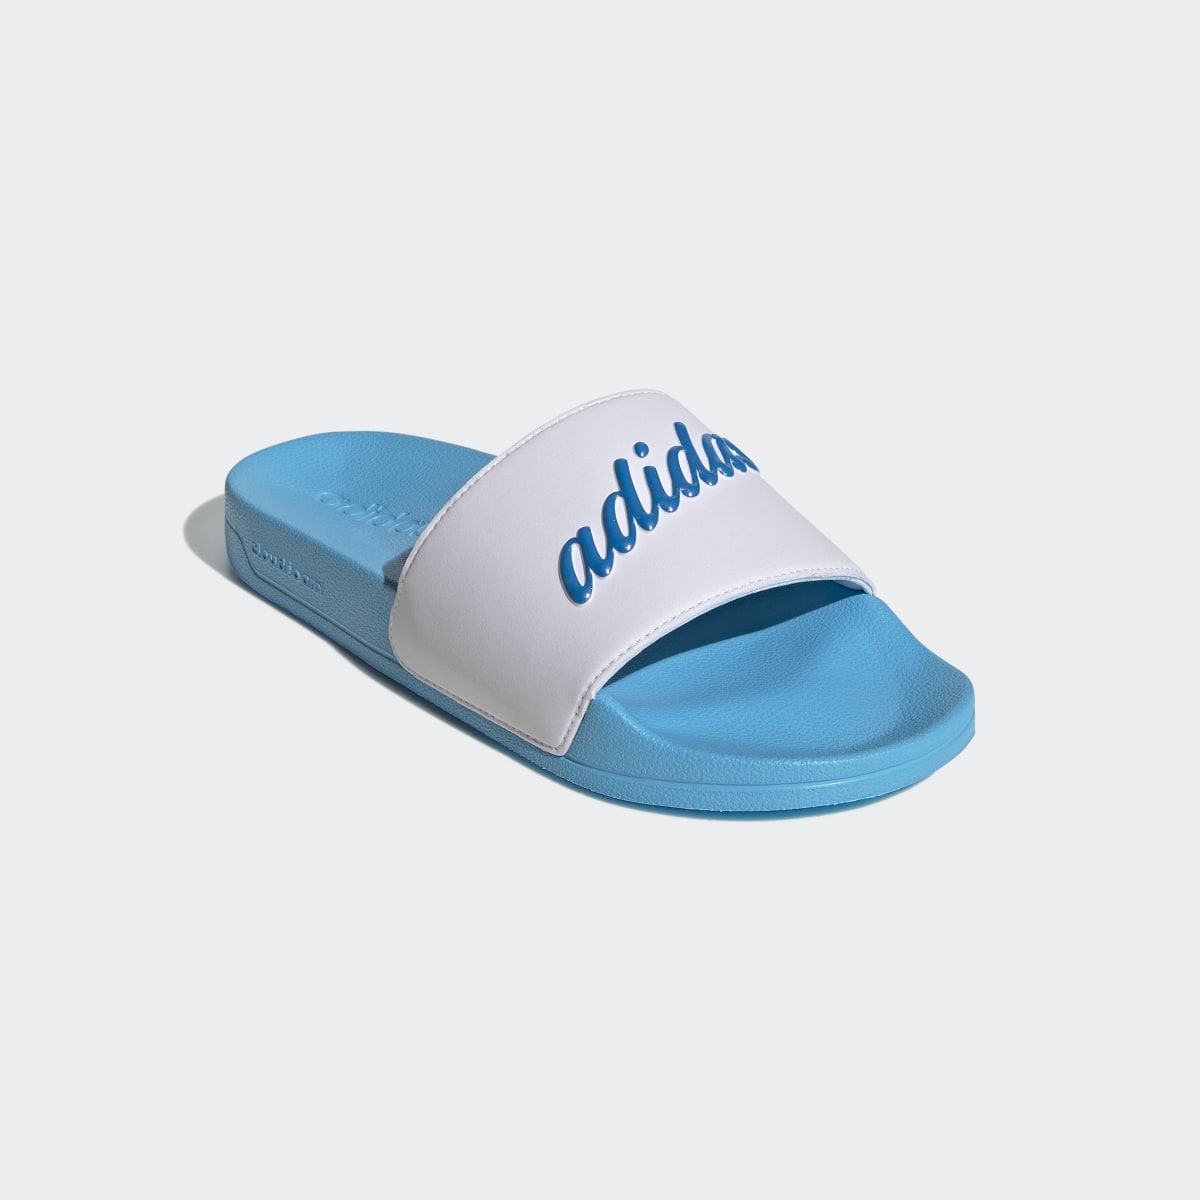 Adidas adilette Shower Slides. 5